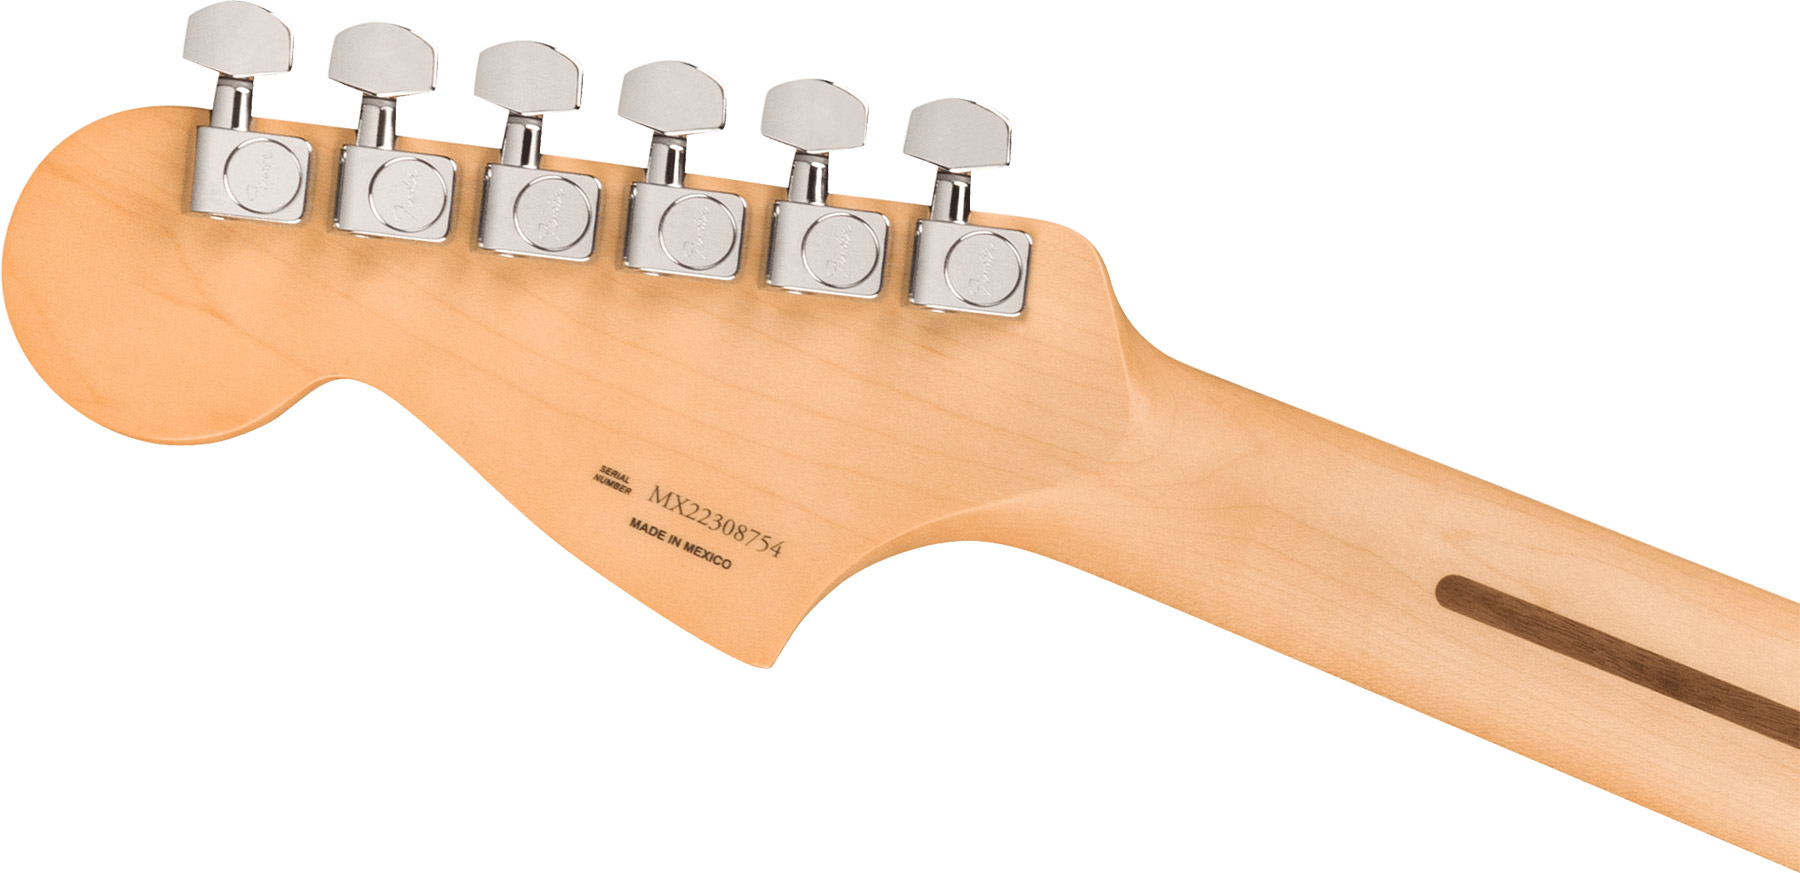 Fender Jaguar Player Mex 2023 Hs Trem Pf - Candy Apple Red - Retro-rock elektrische gitaar - Variation 3